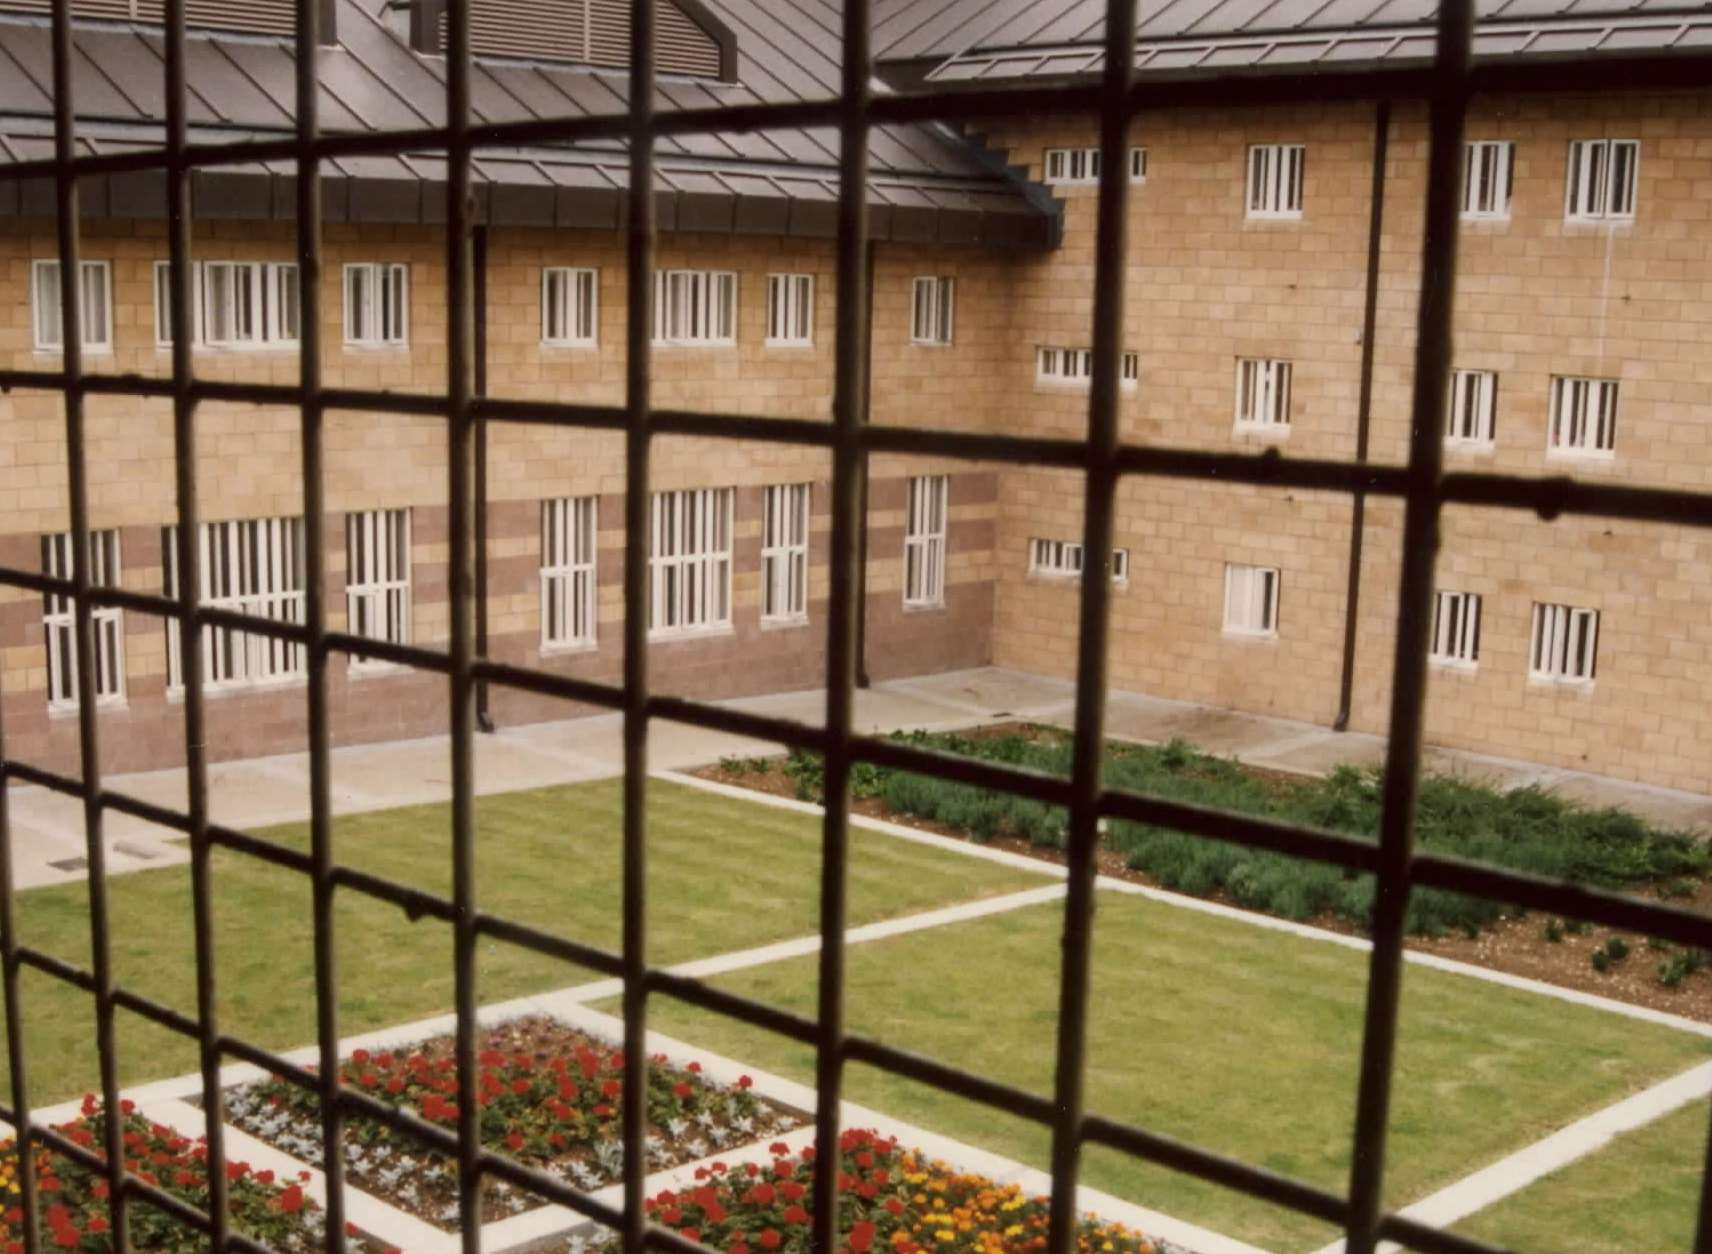 Several Kent prisons are understaffed